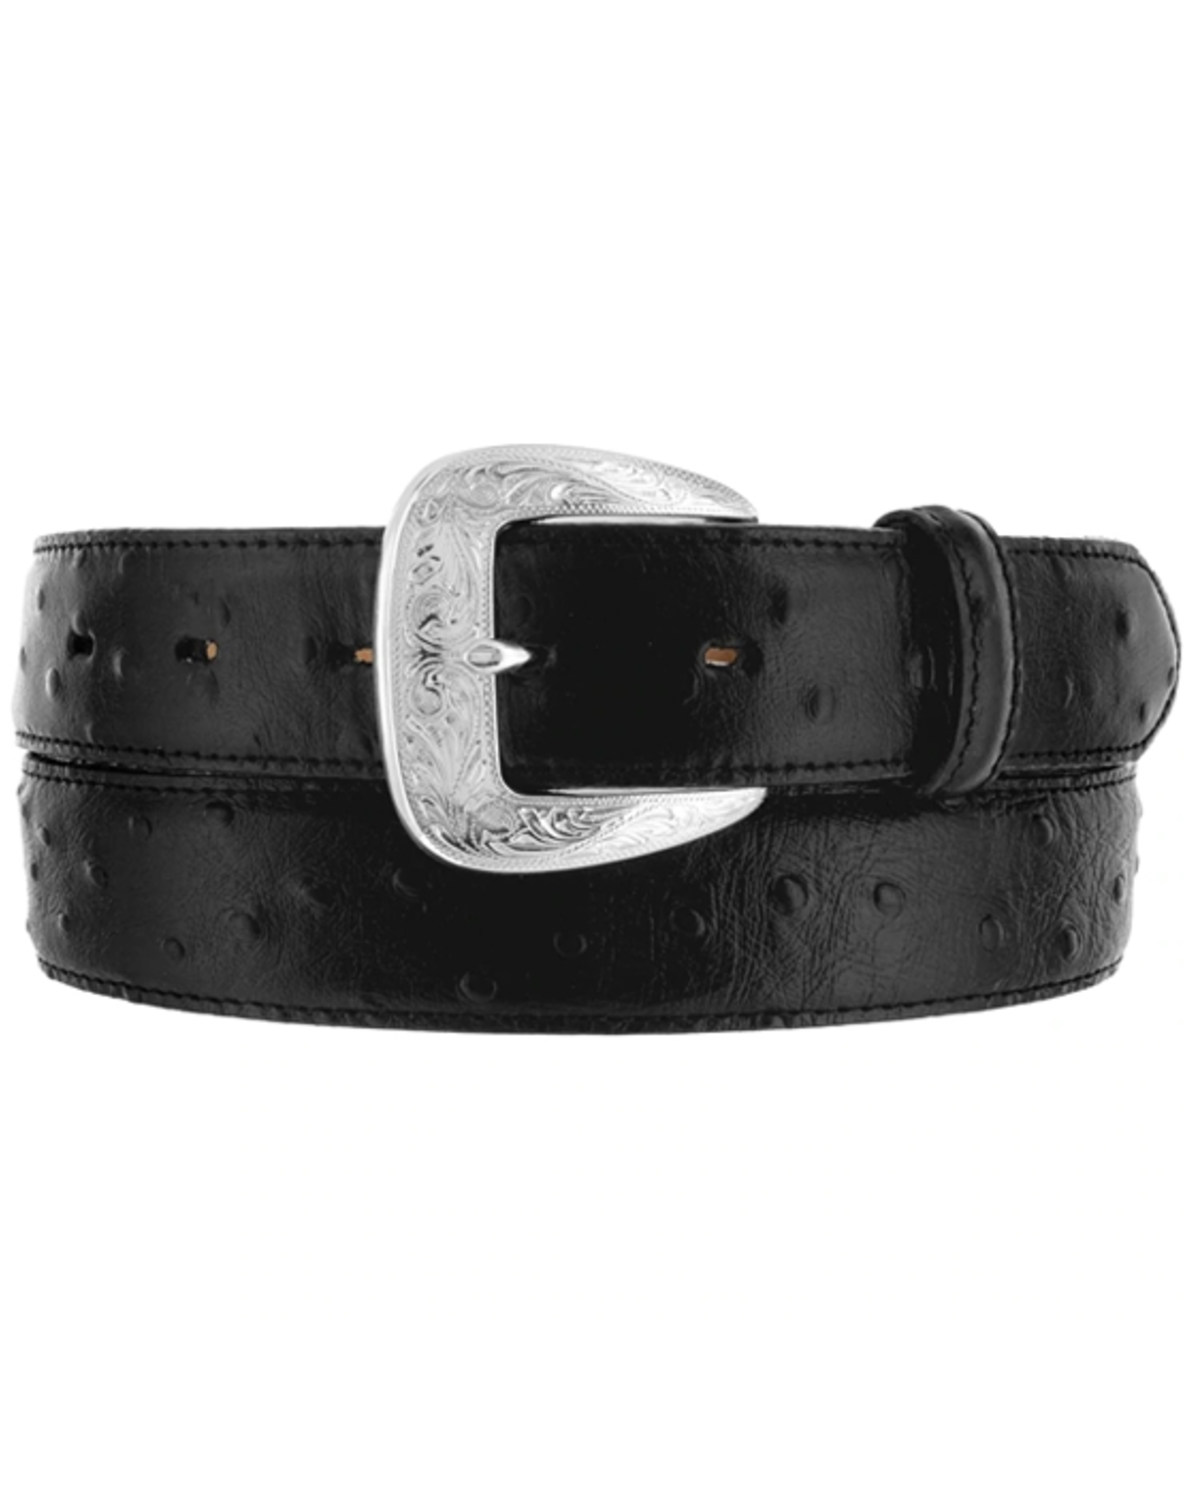 Tony Lama Men's Ostrich Embossed Leather Belt